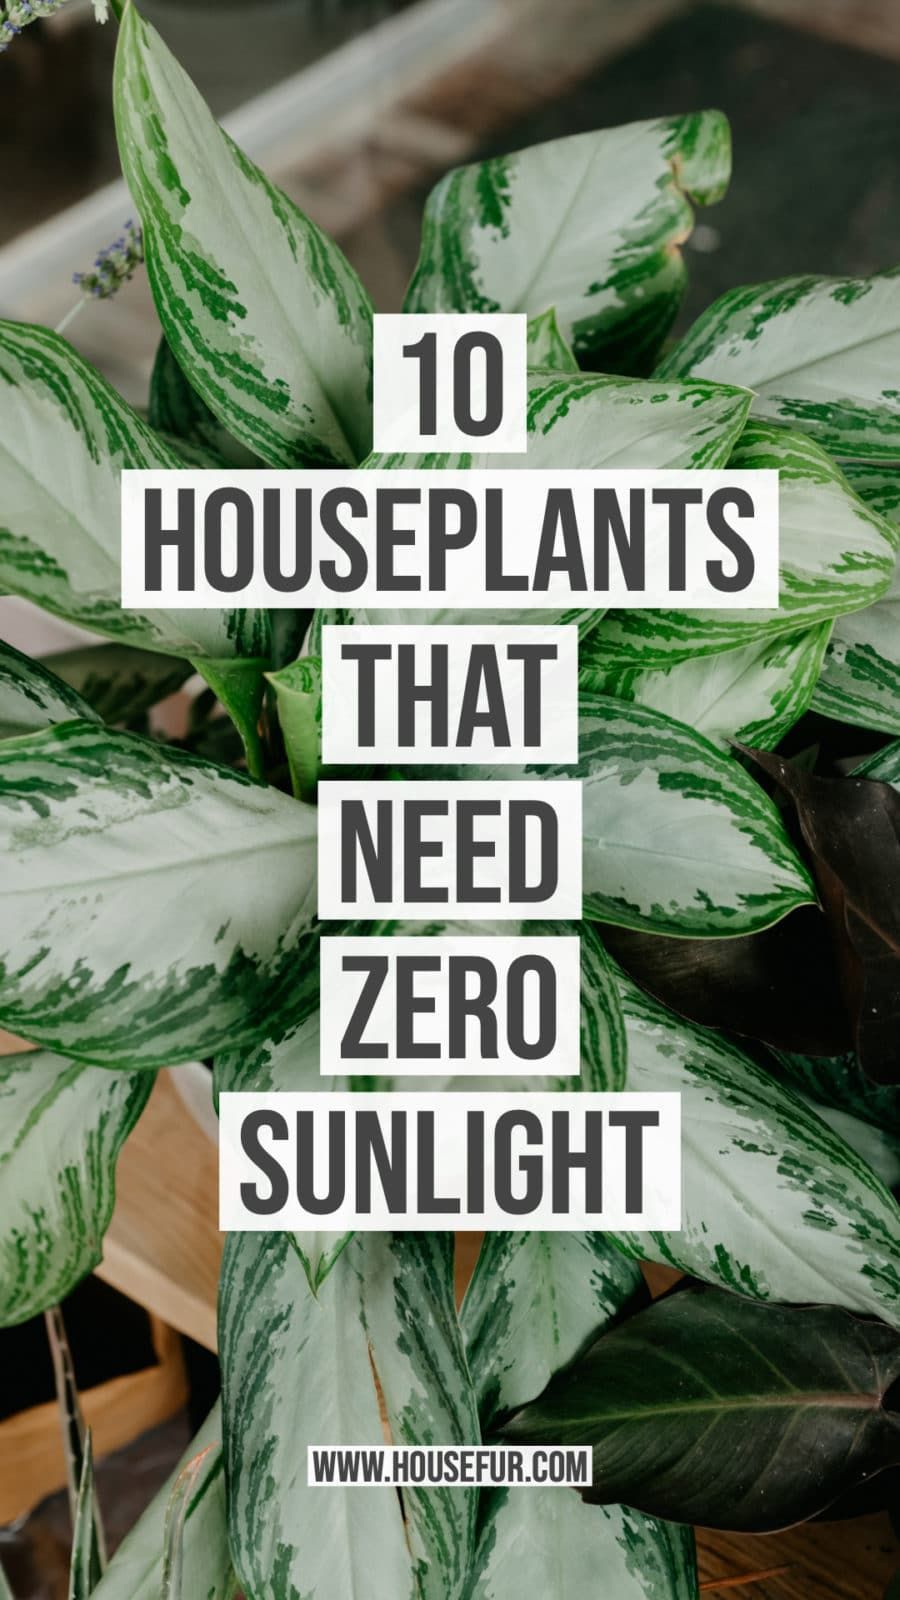 14 plants House healthy ideas